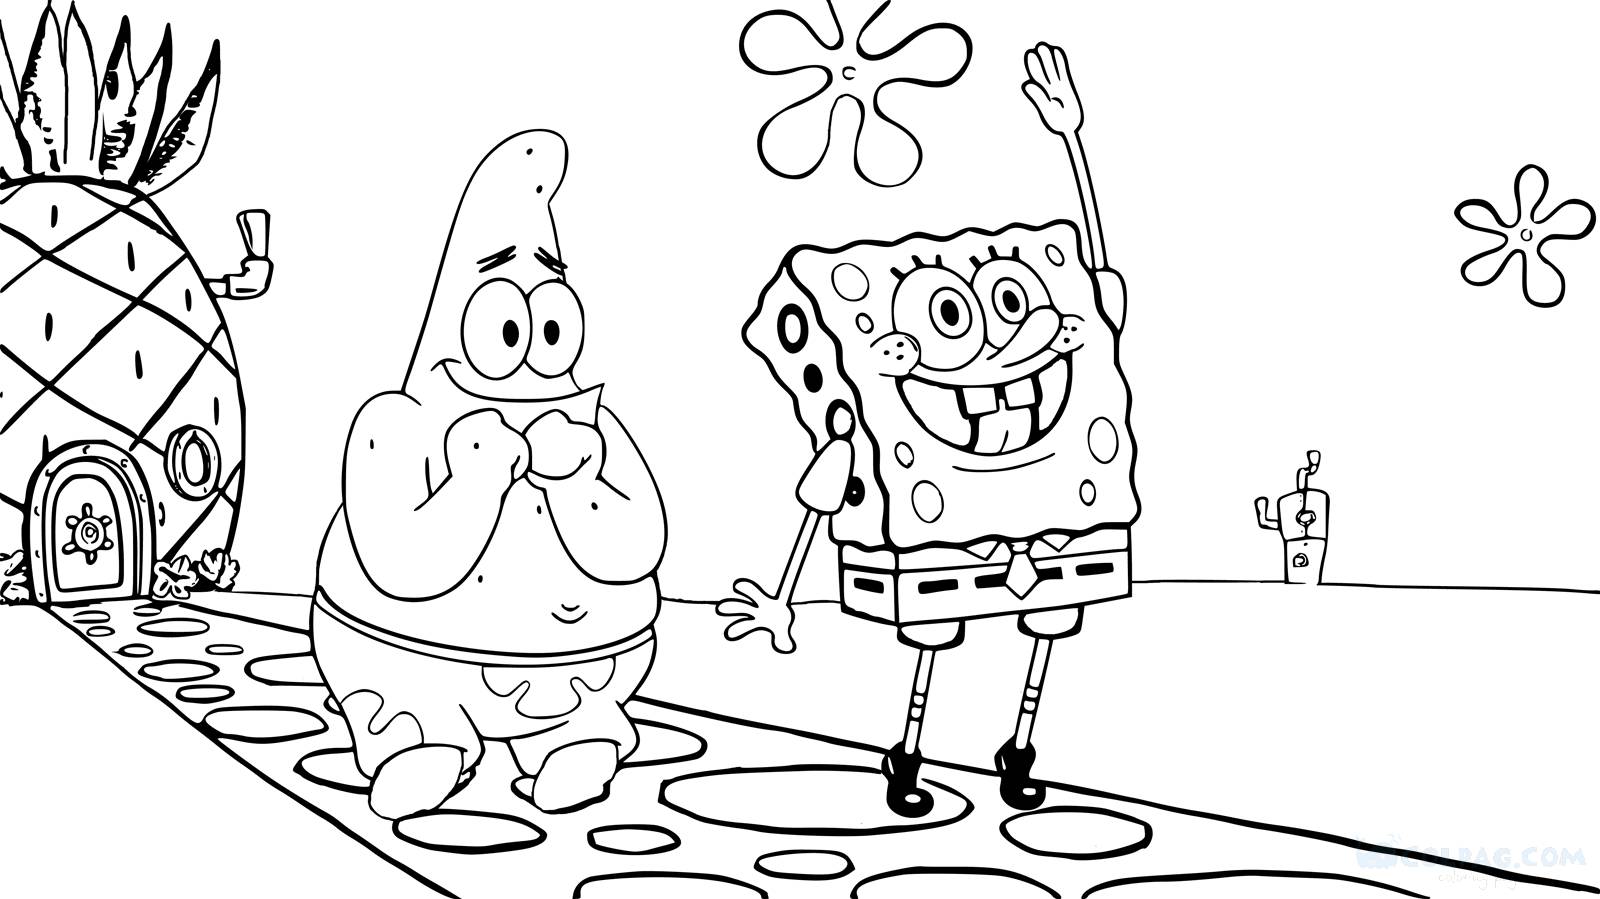 sponge-bob-coloring-page-colpag-com-5